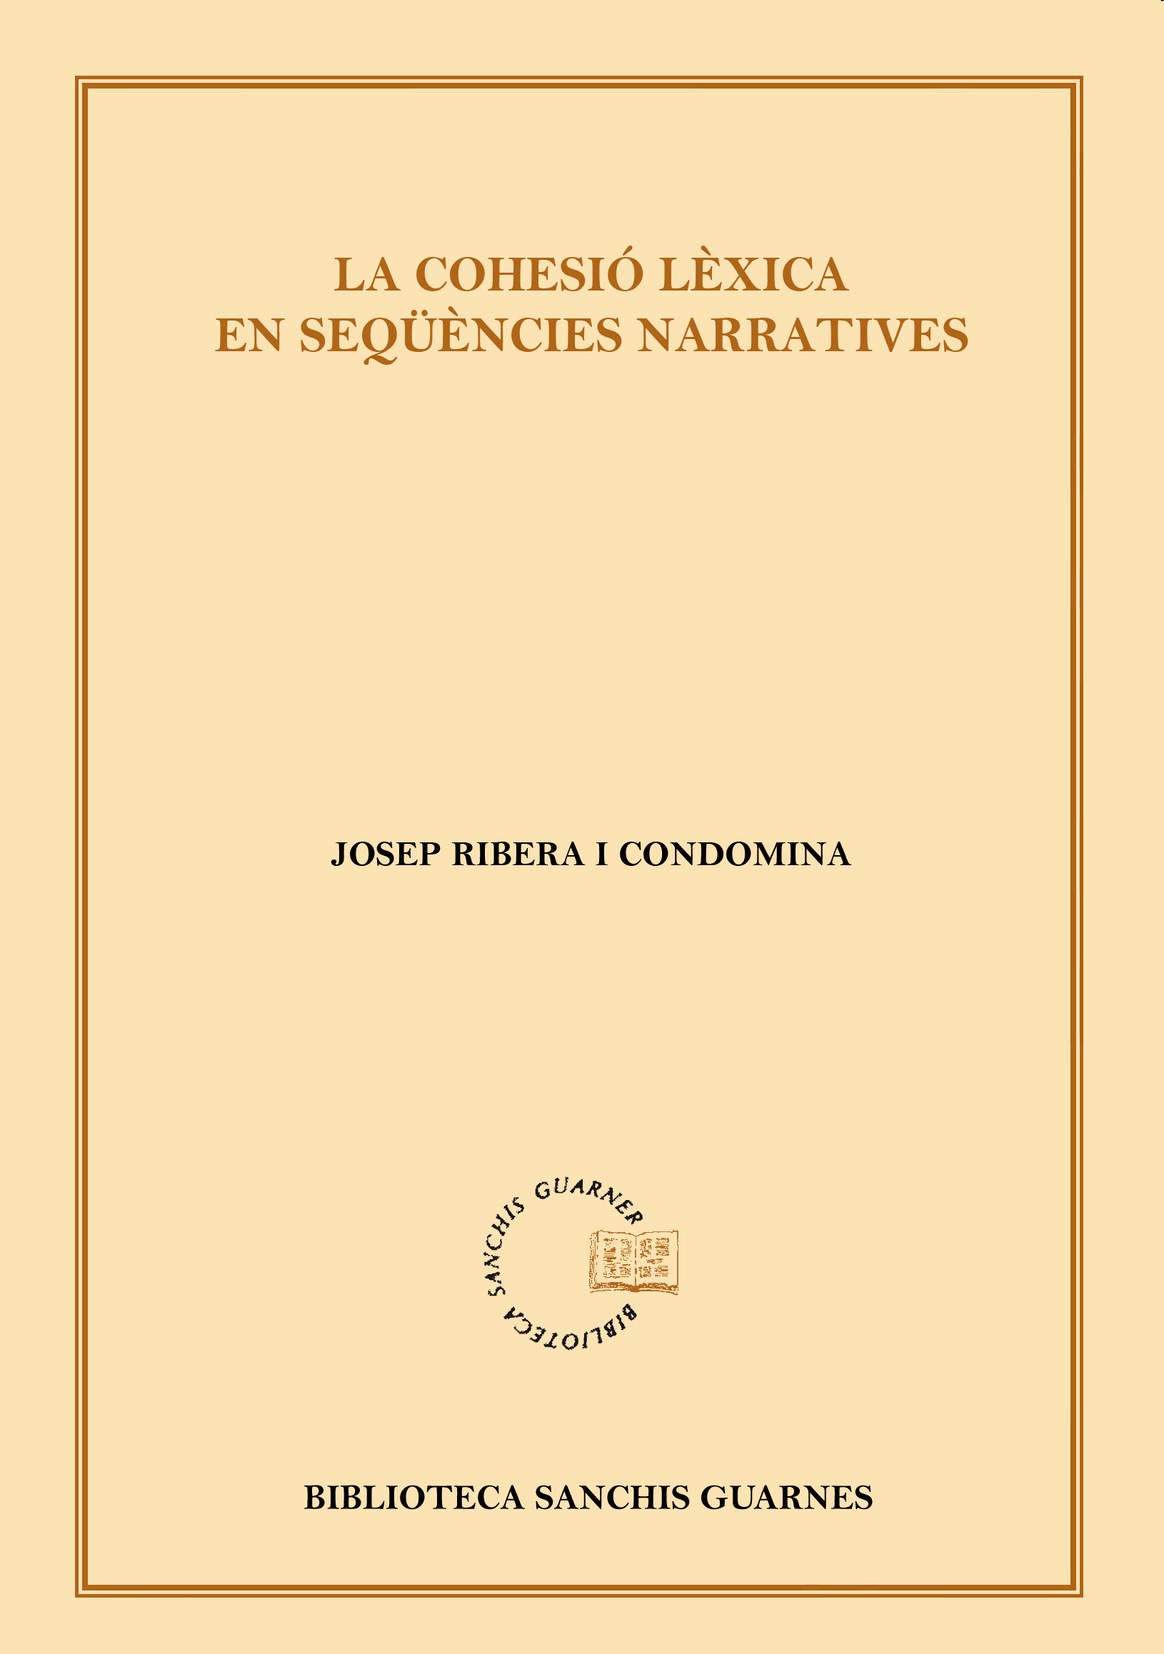 Josep Ribera i Condomina